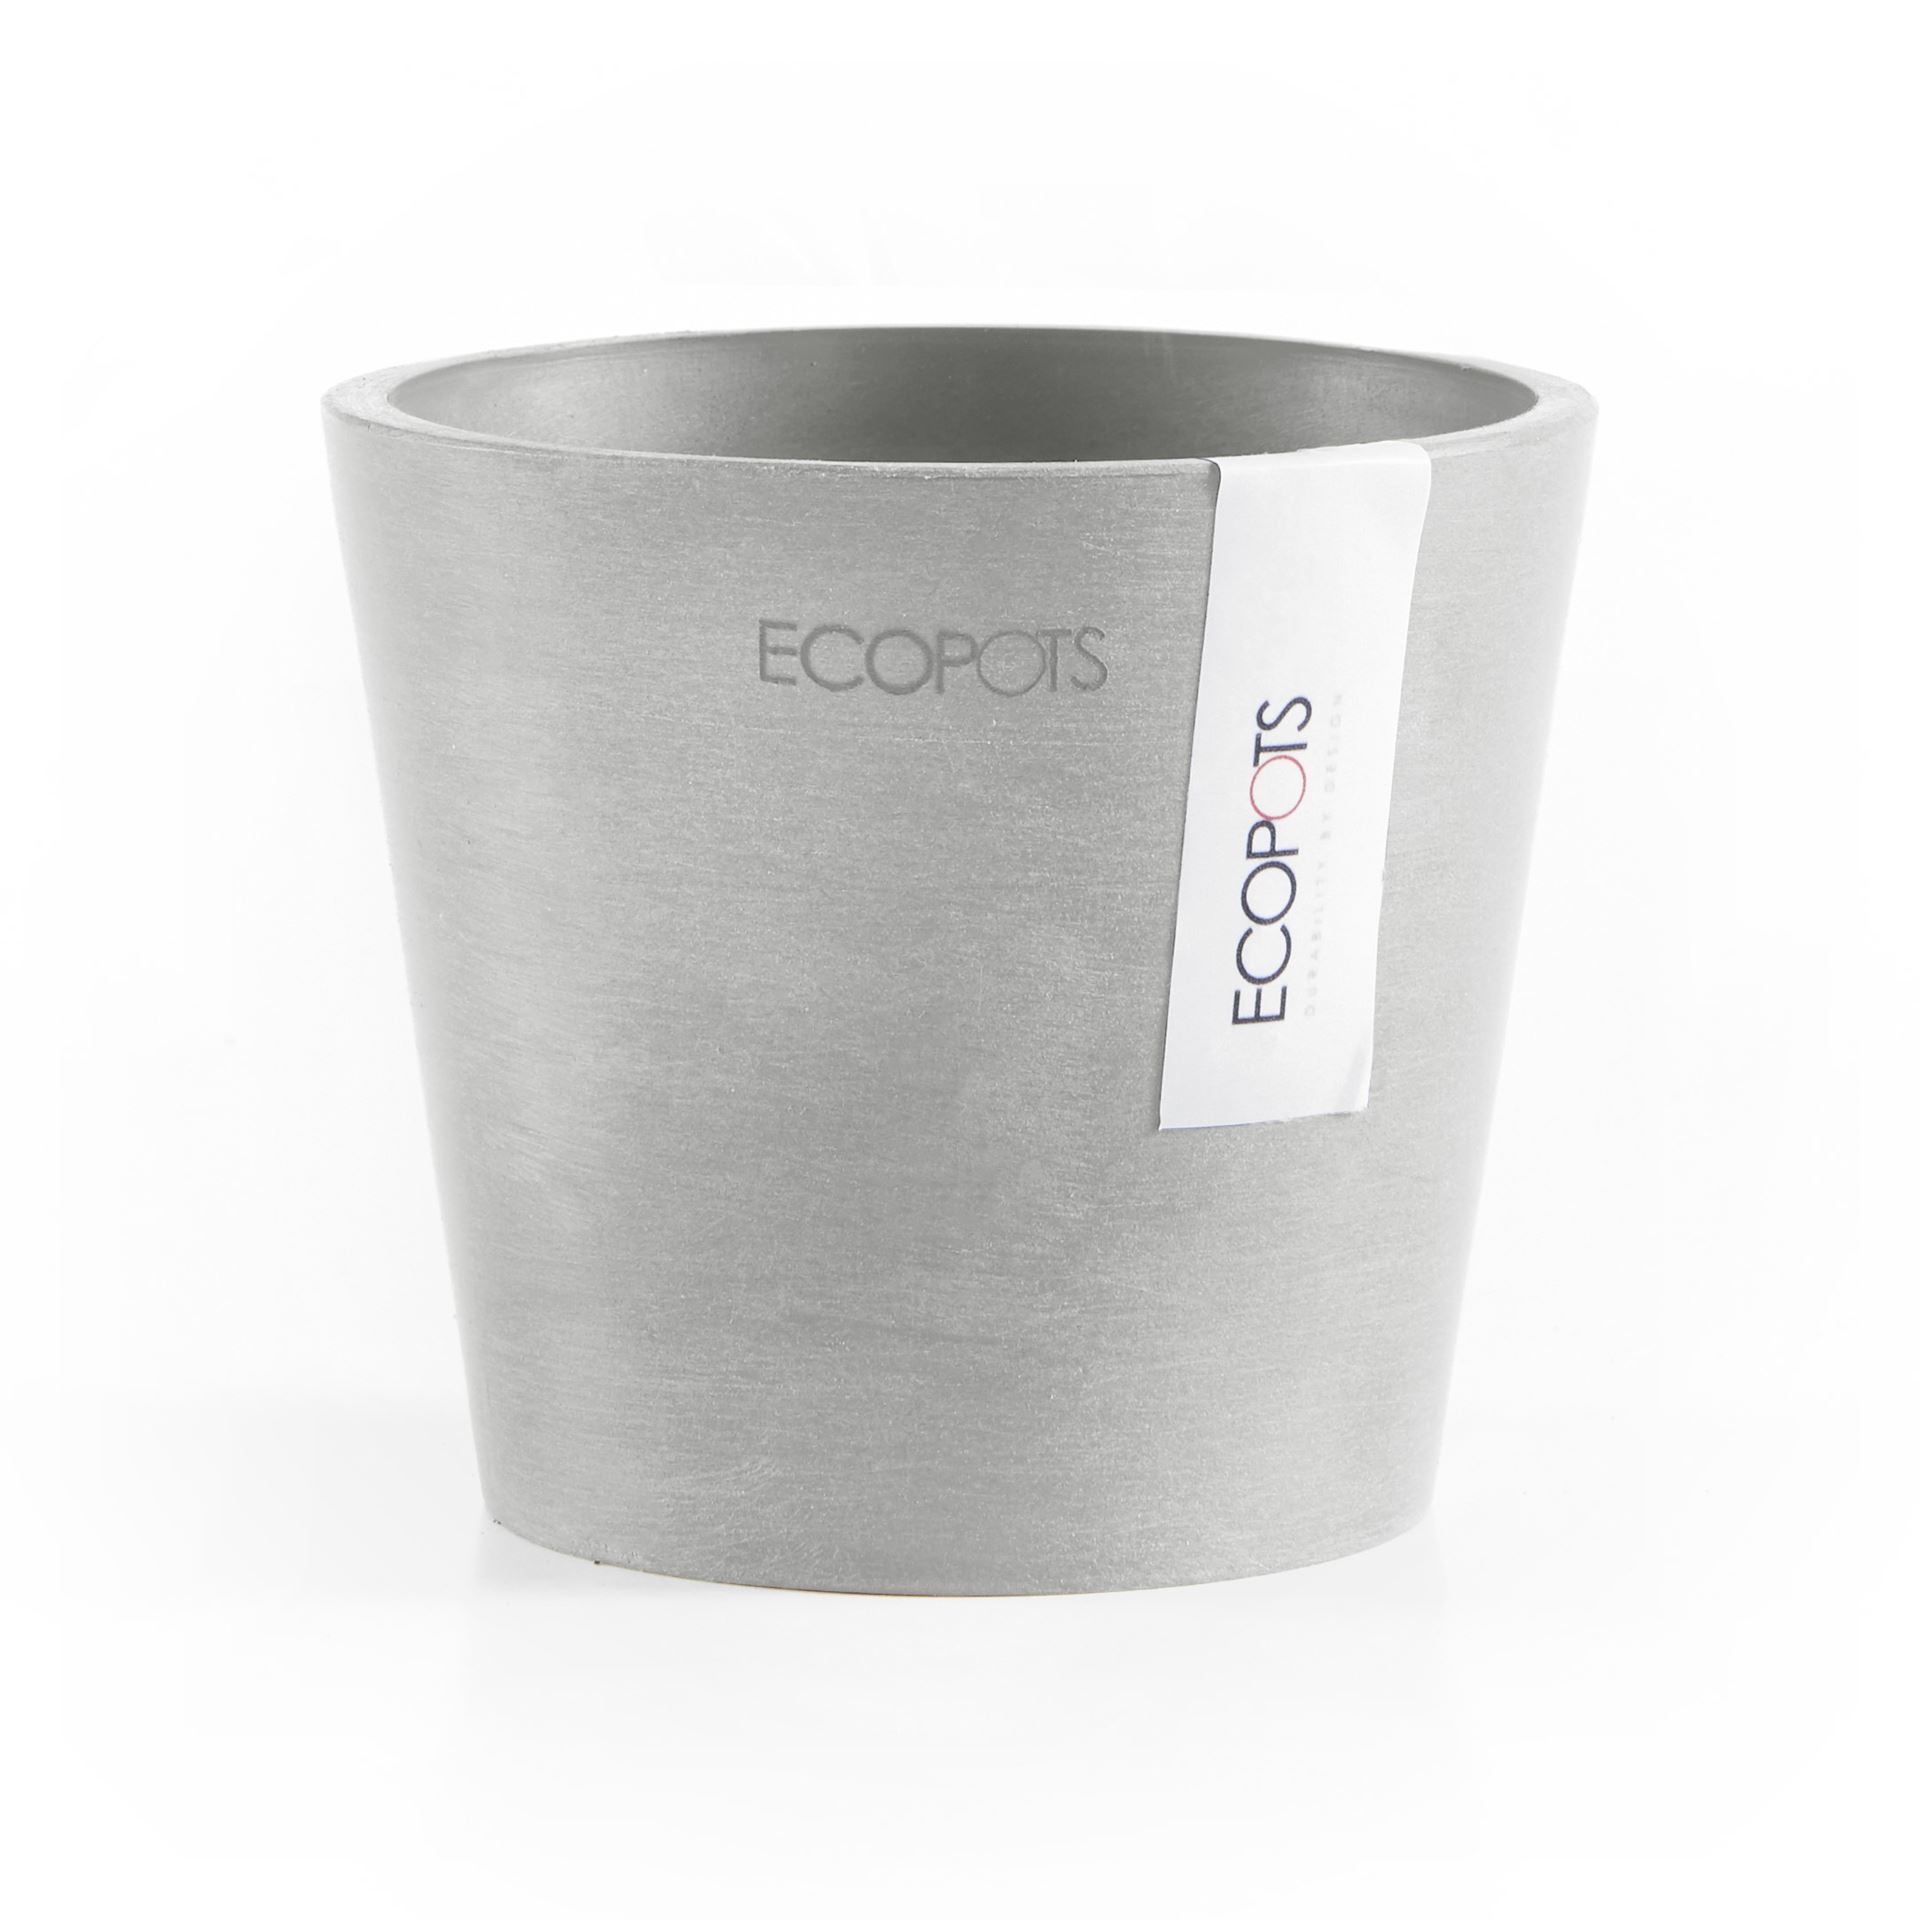 Ecopots-amsterdam-mini-white-grey-10-5-cm-H9-2-cm